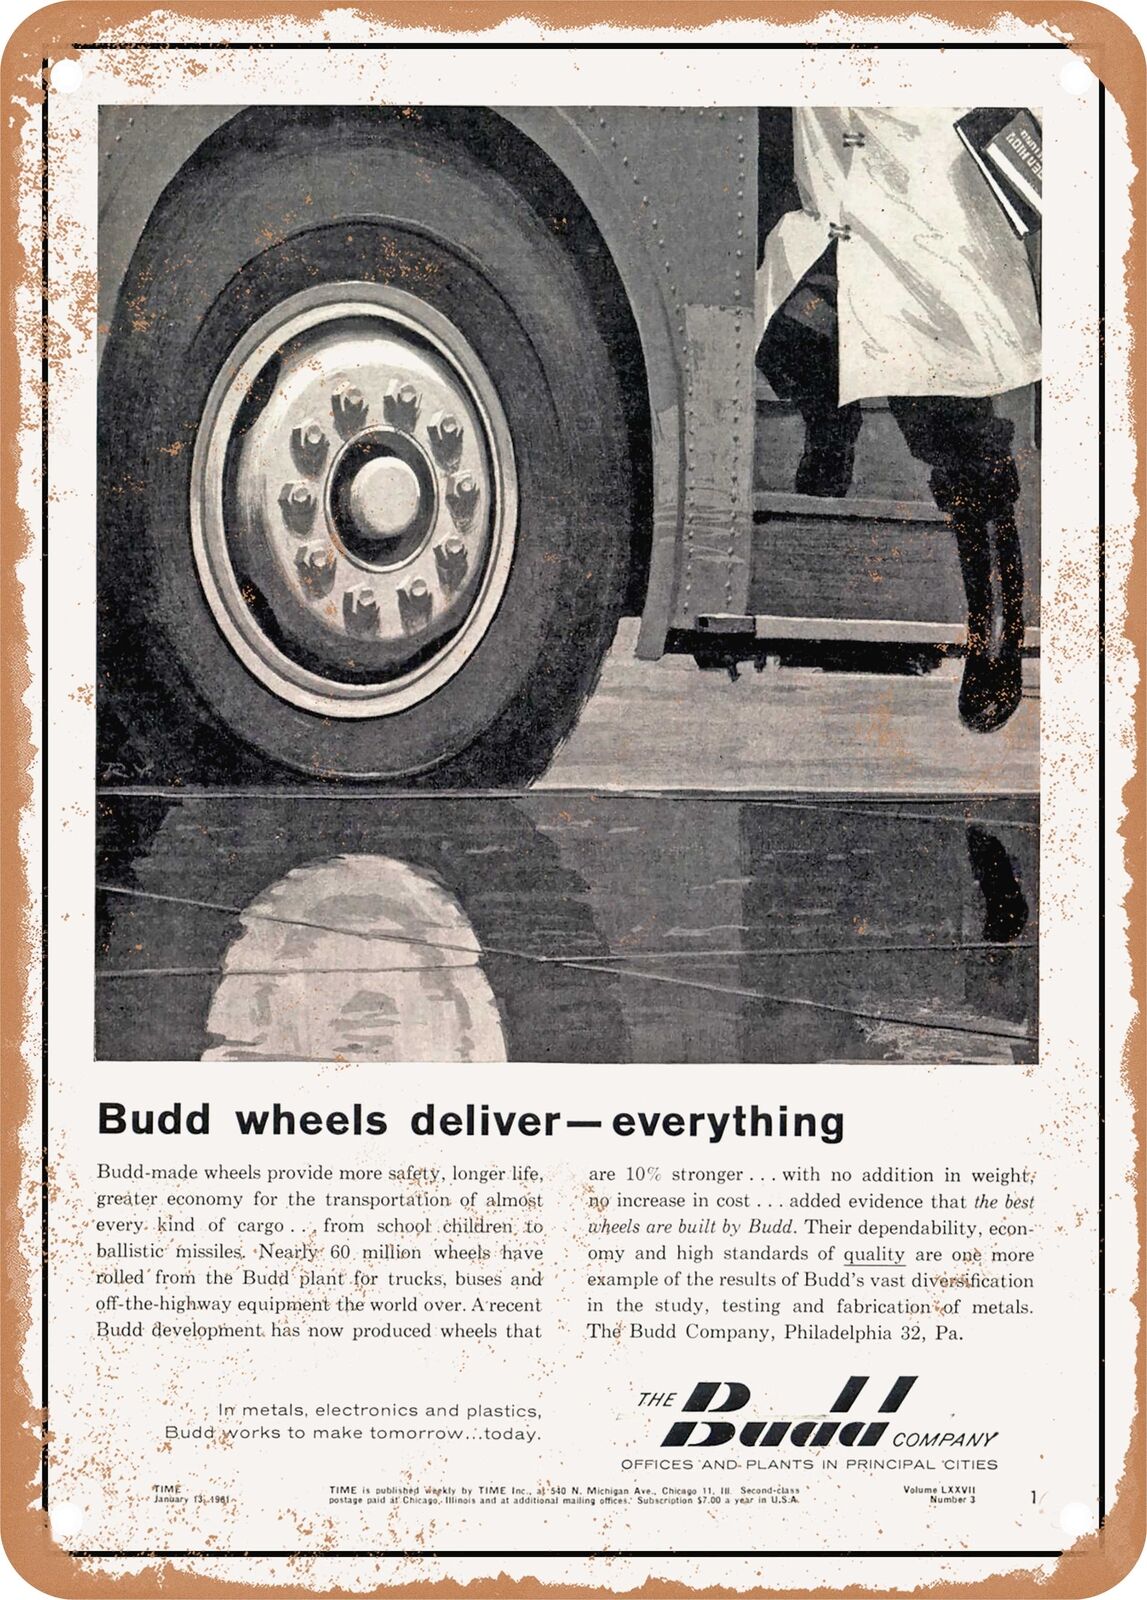 METAL SIGN - 1961 Budd Wheels Deliver Everything Vintage Ad